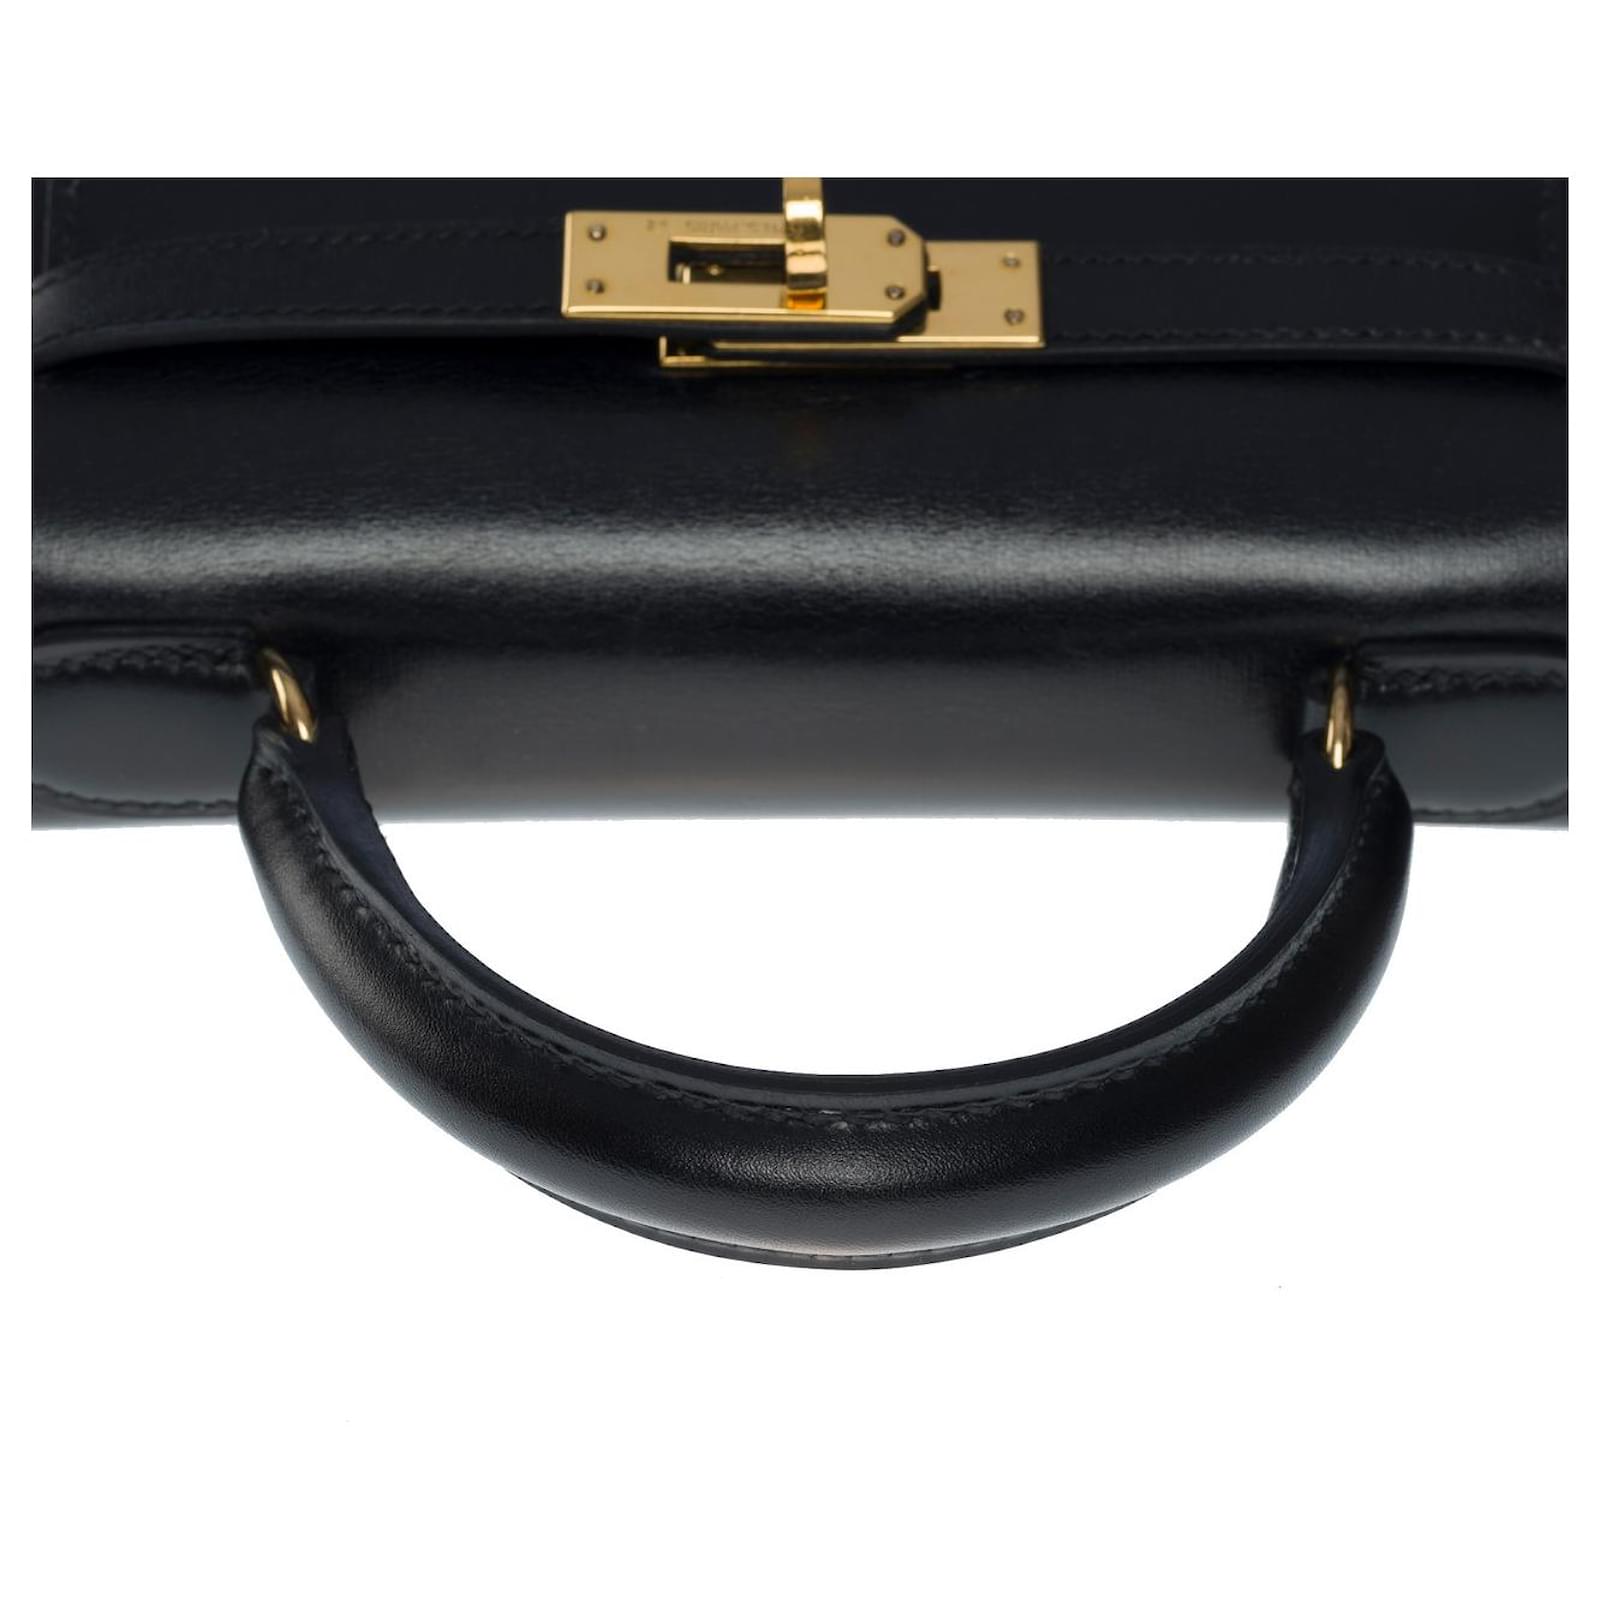 Hermès Kelly Handbag 368950